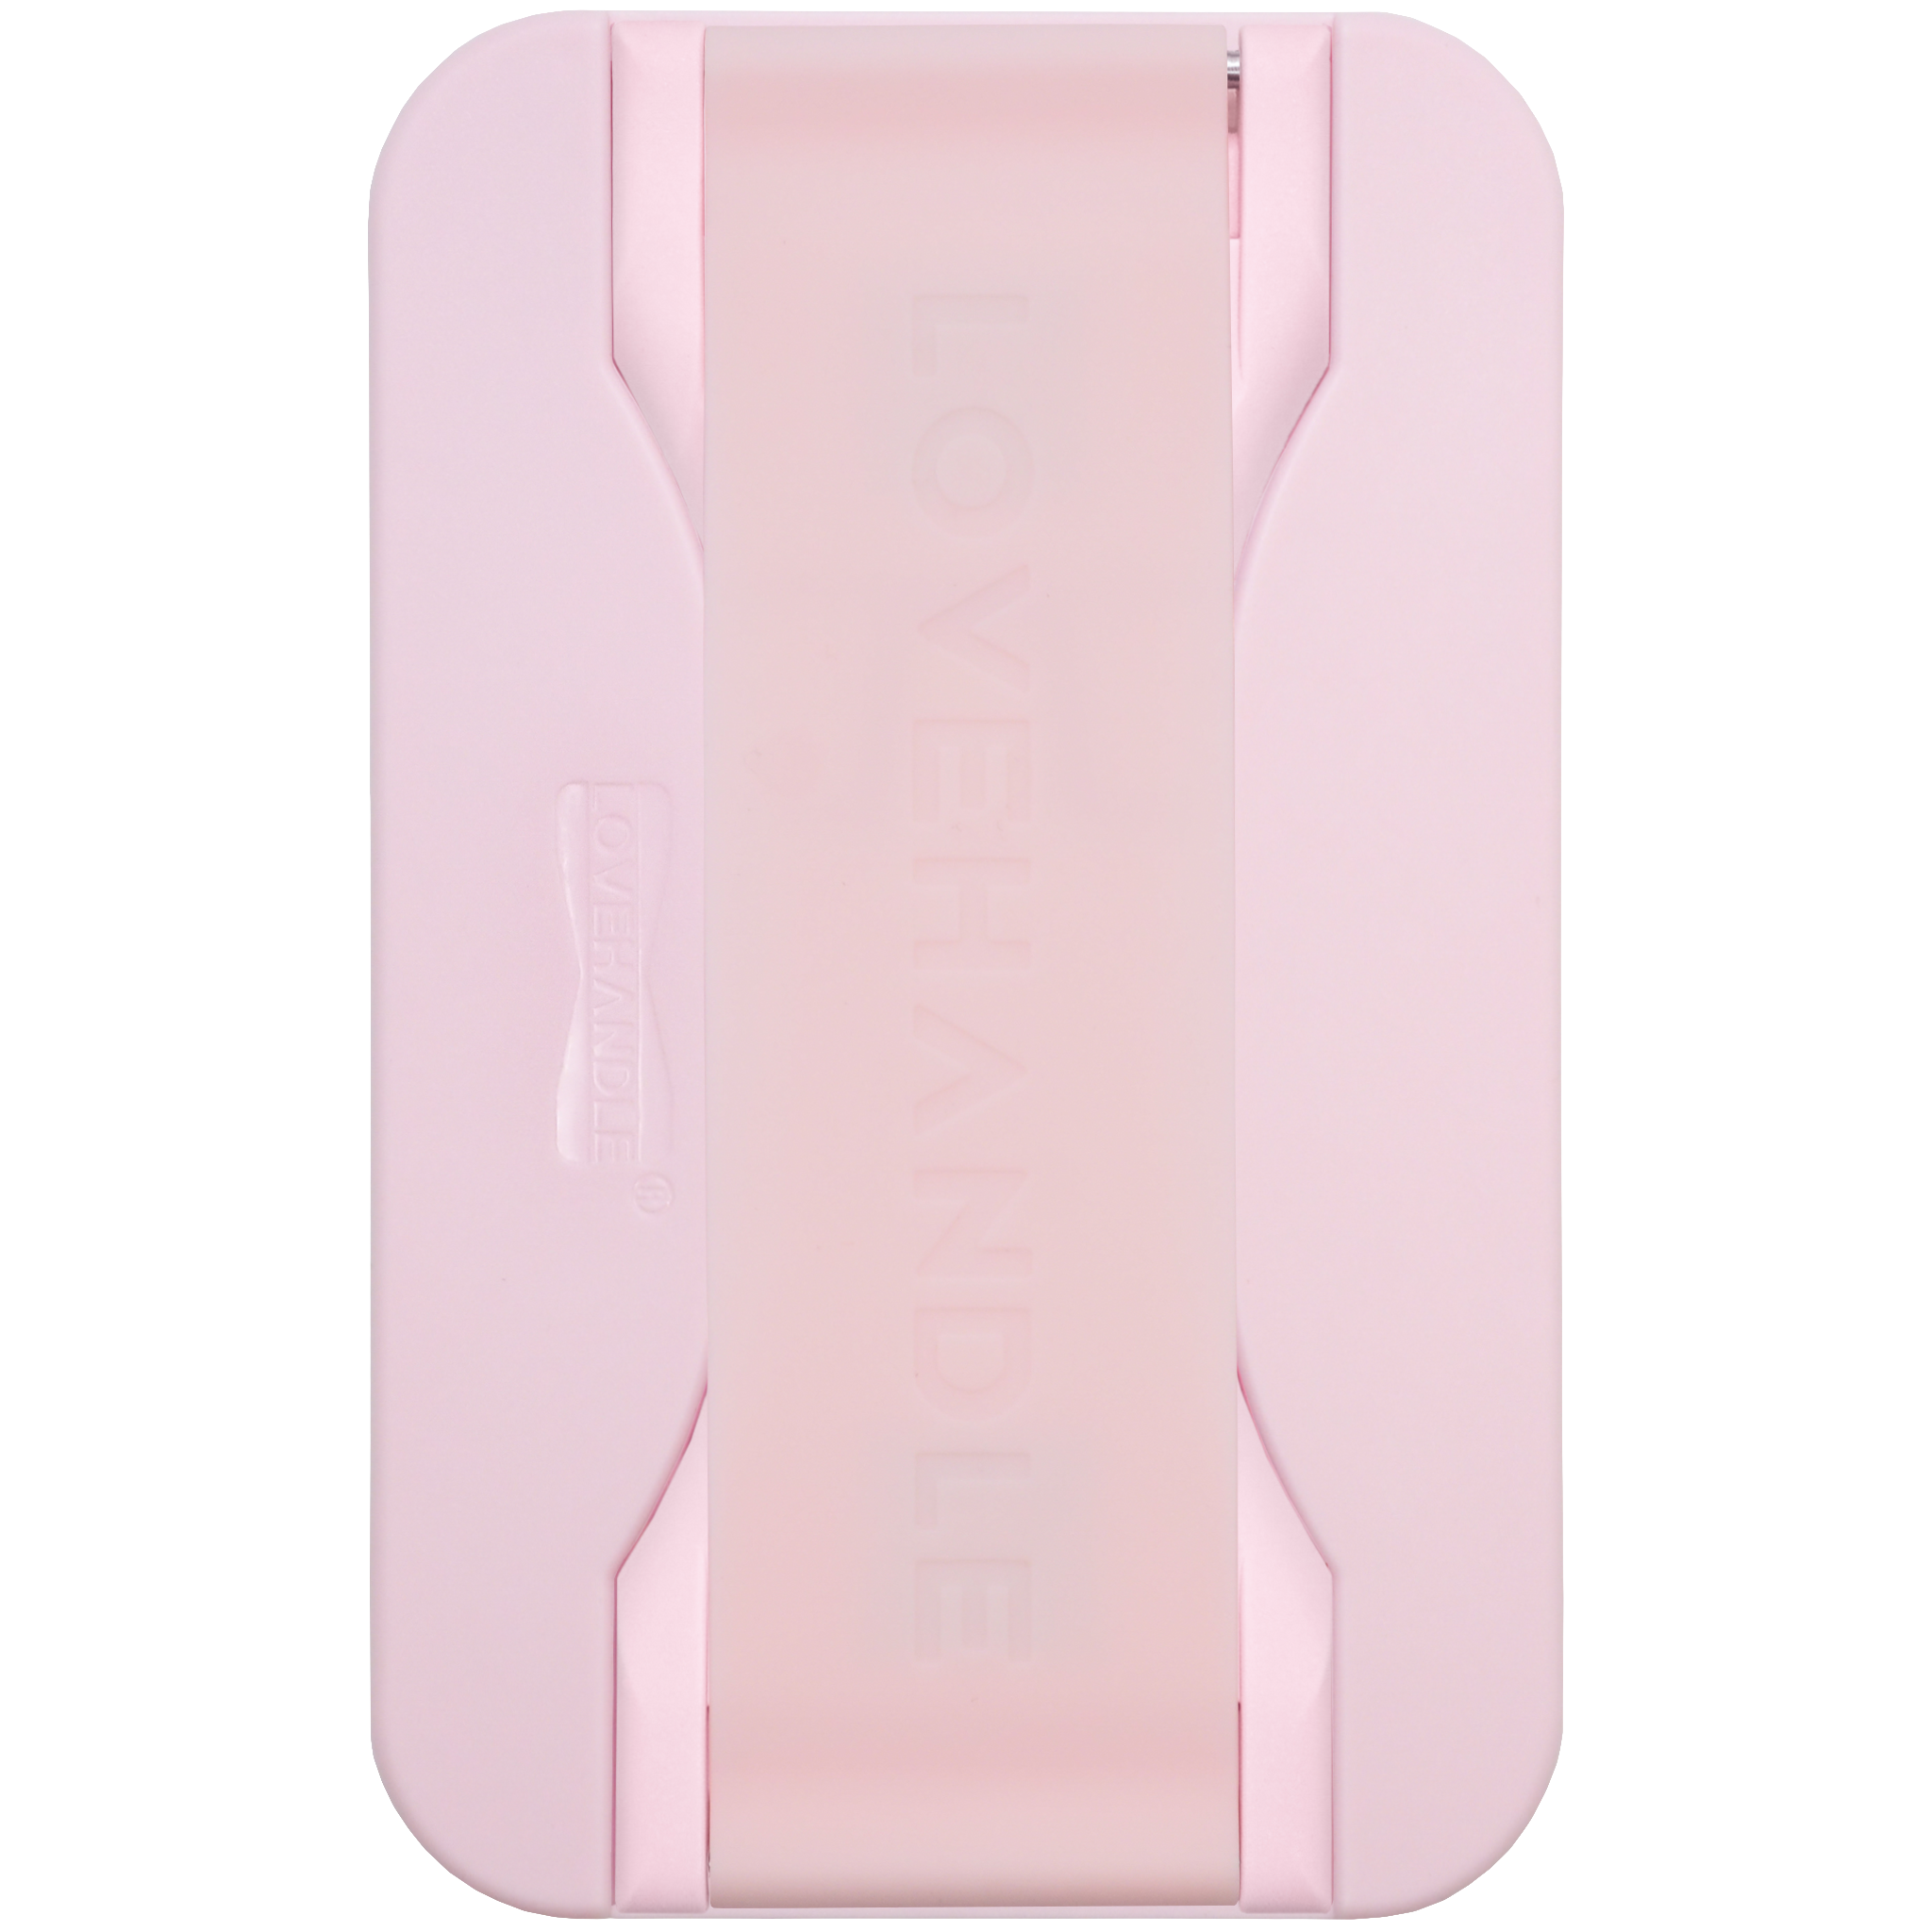 PRO for MagSafe® - Light Pink